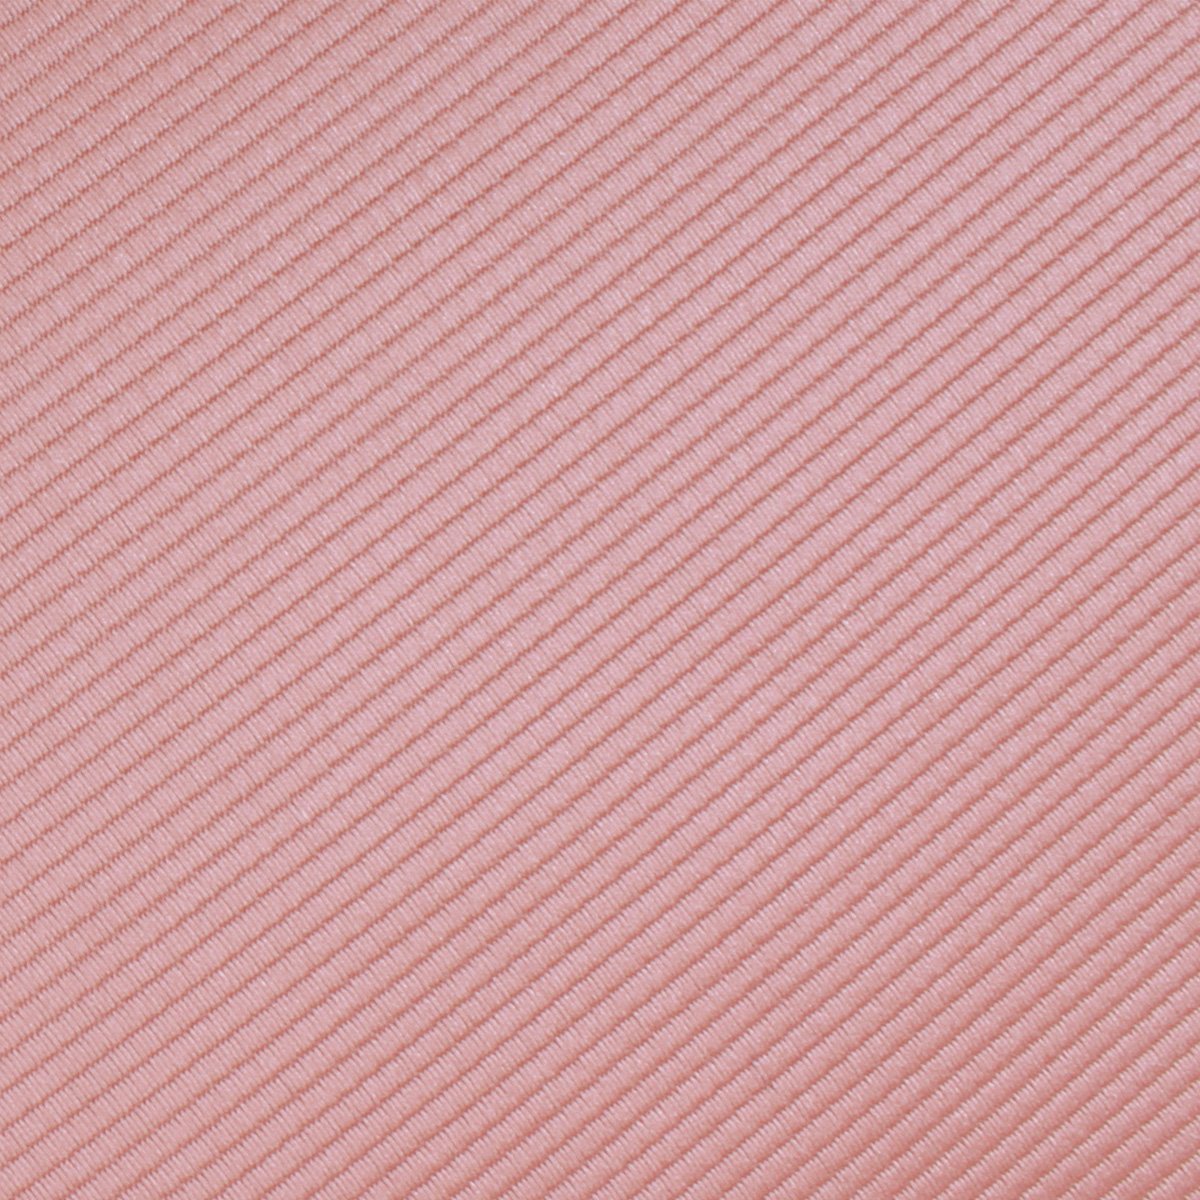 Dusty Blush Pink Twill Skinny Tie Fabric